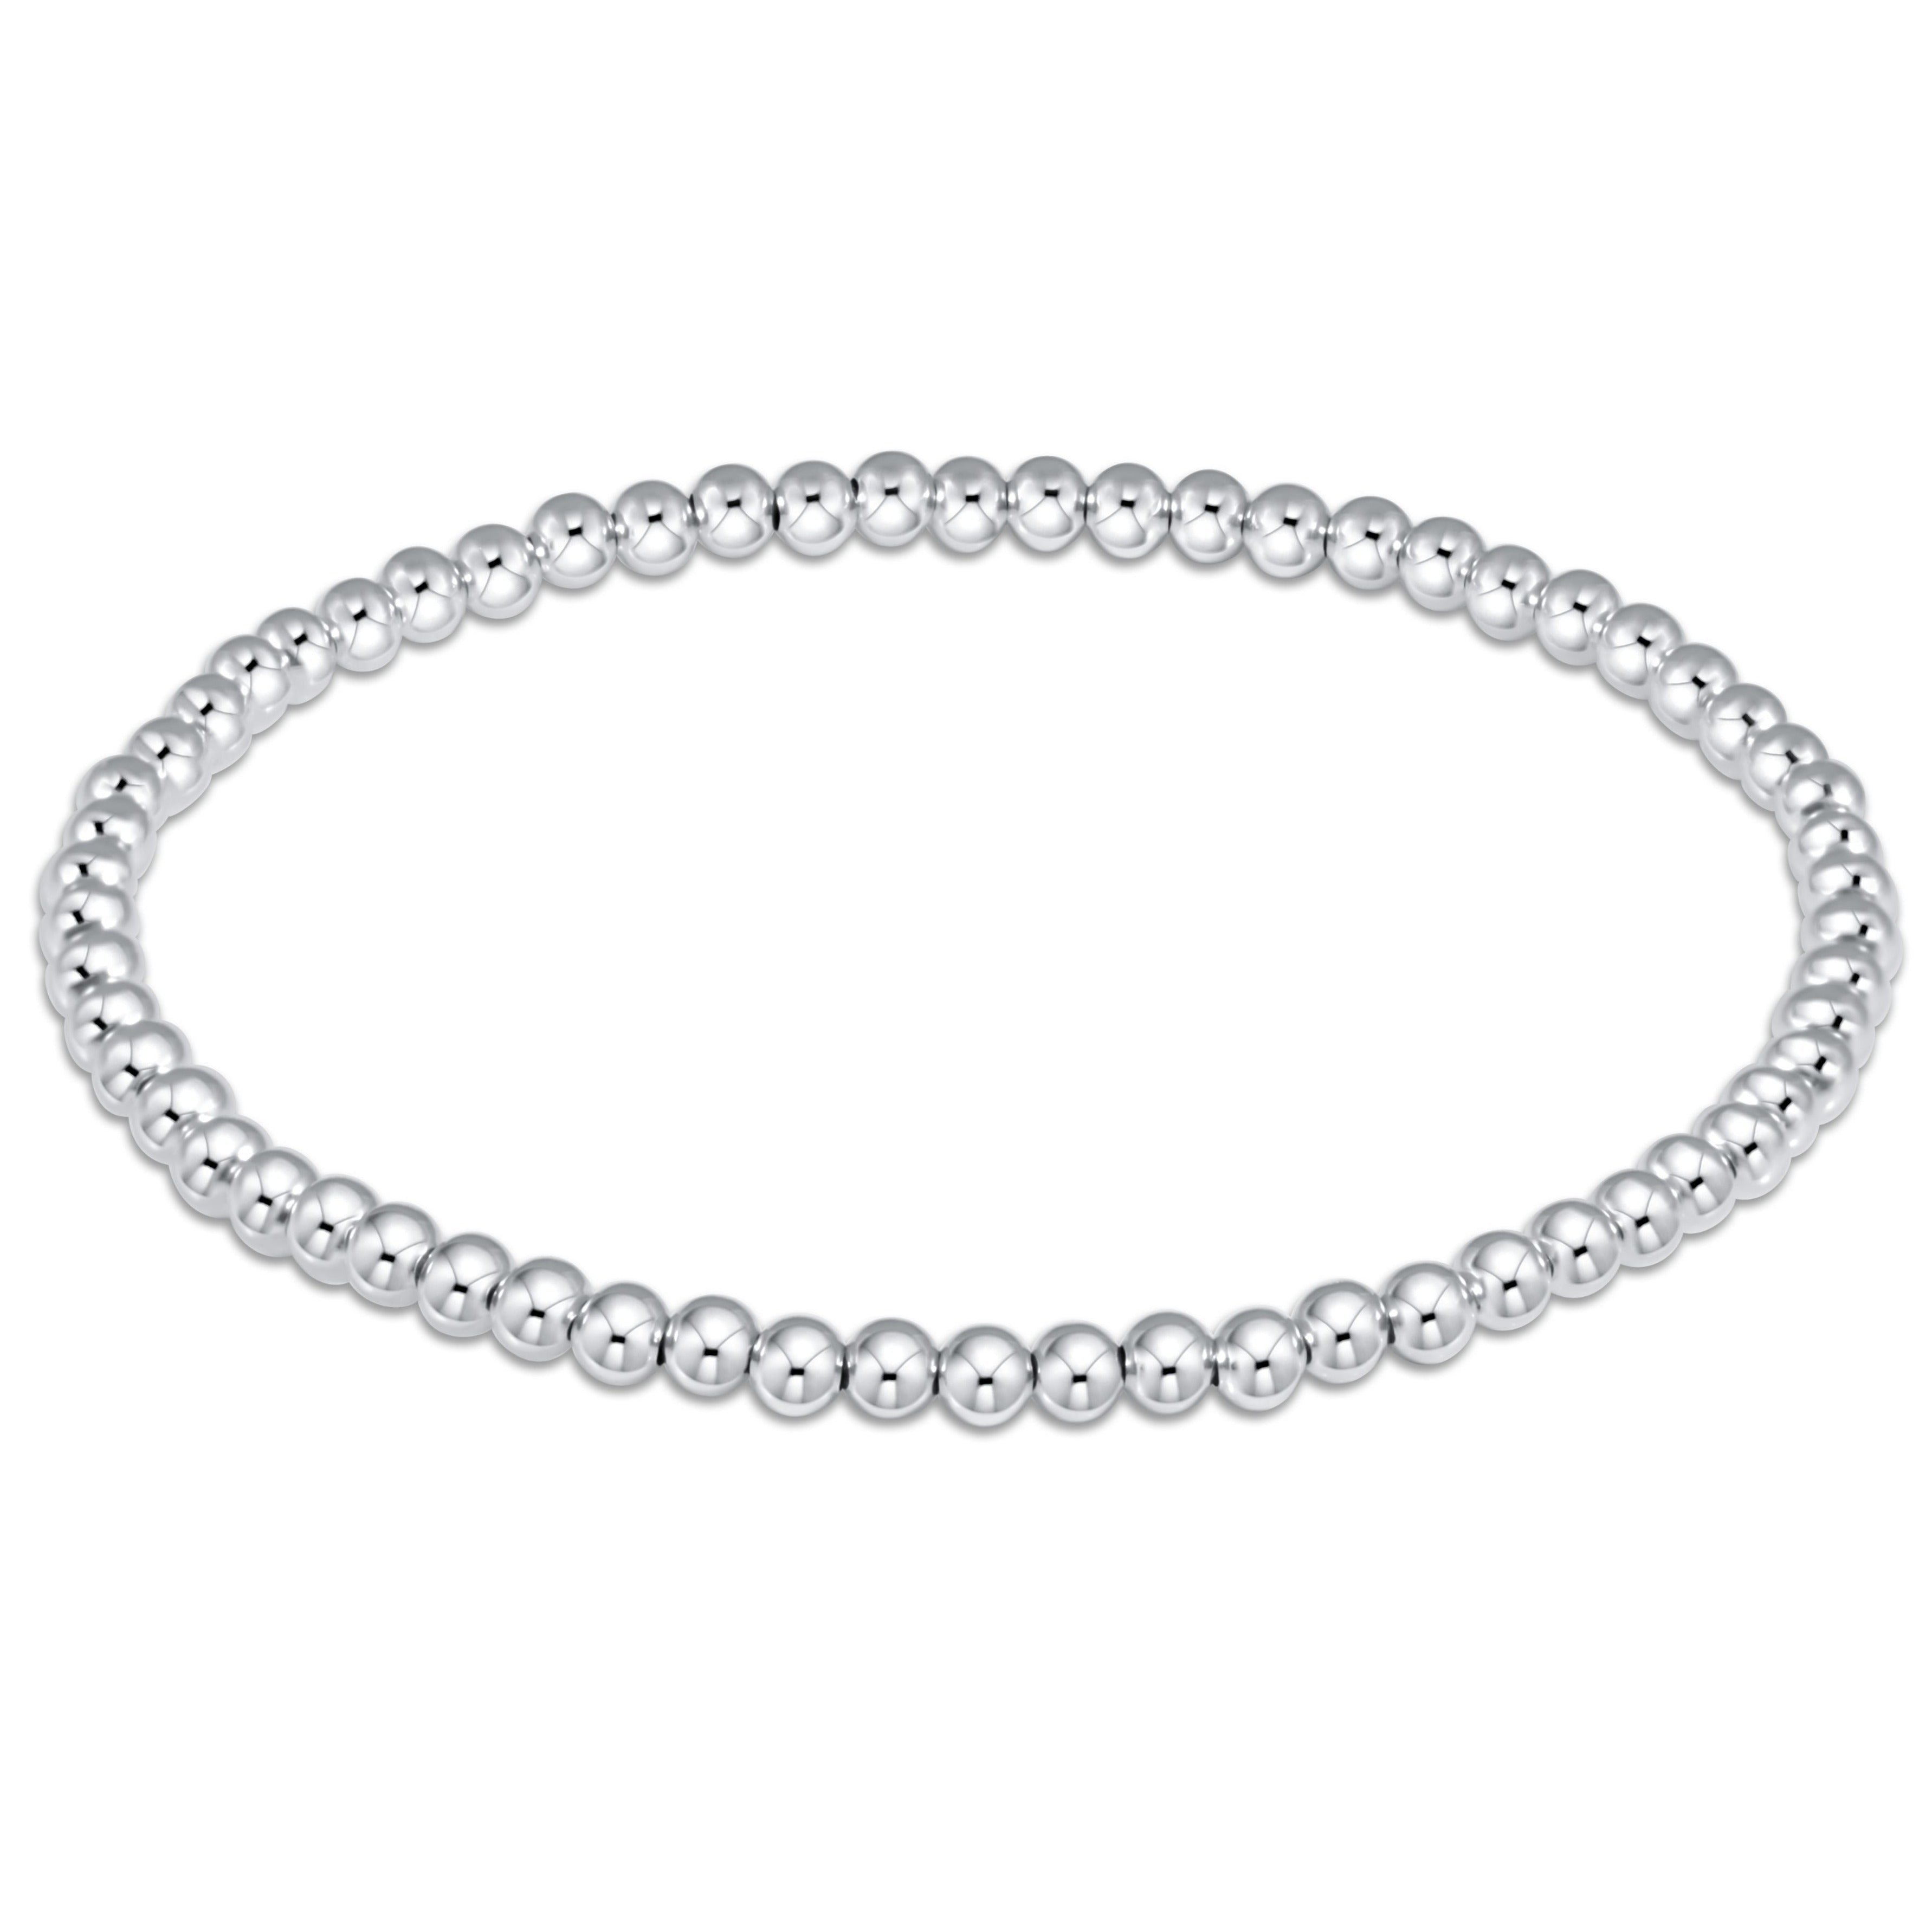 Gemstone 3mm Sterling Silver Bead Bracelet